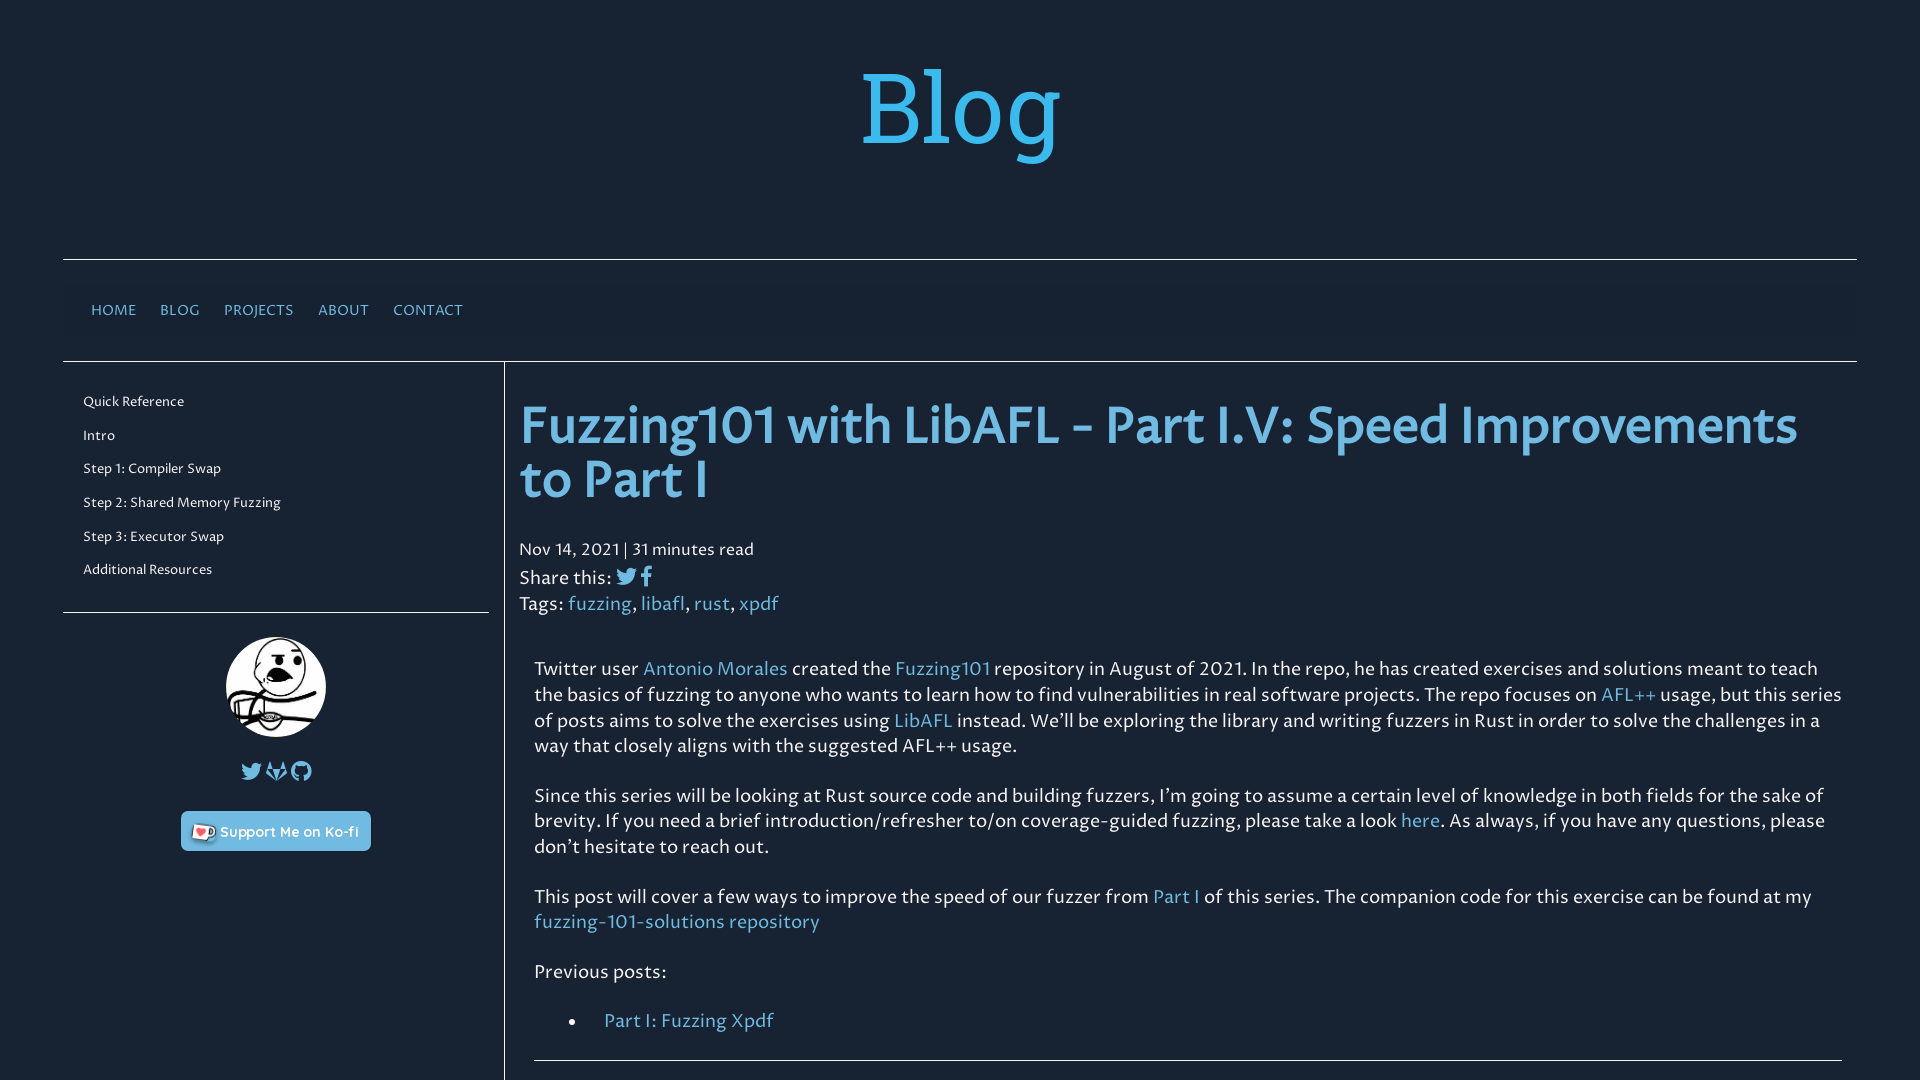 Fuzzing101 with LibAFL - Part I.V: Speed Improvements to Part I